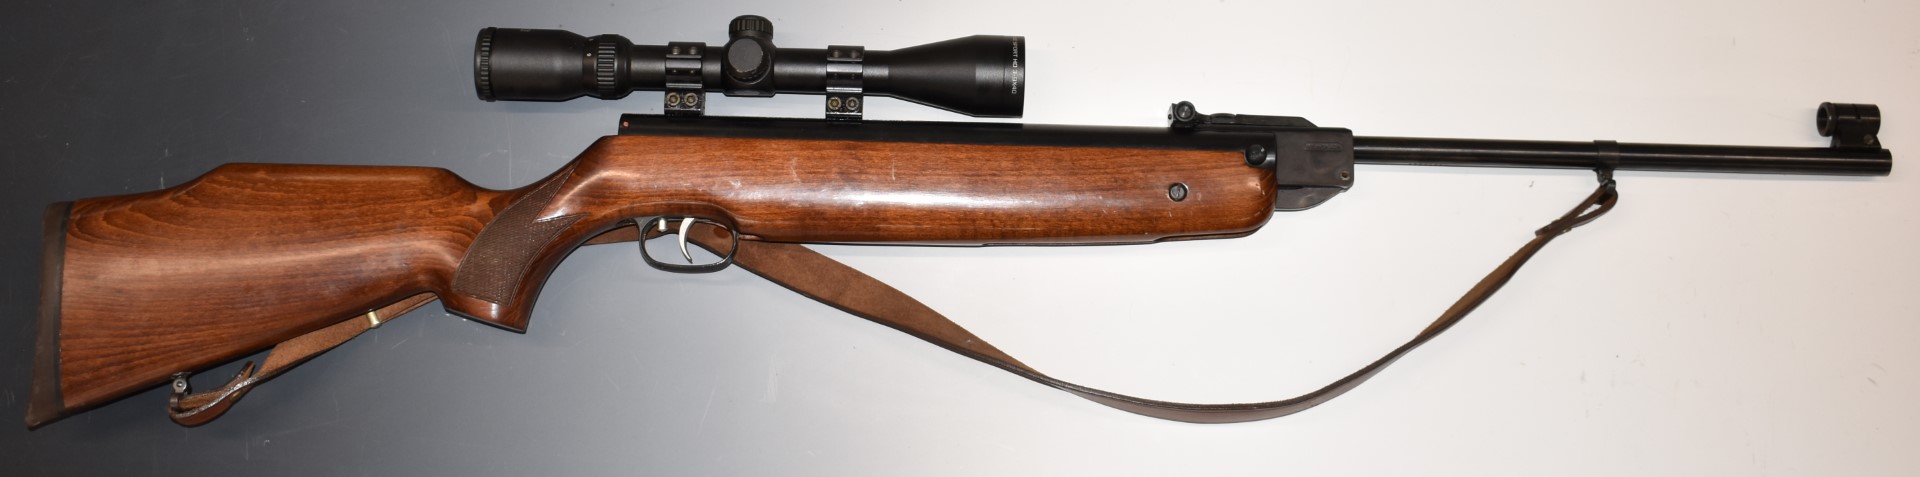 Weihrauch HW80K .22 air rifle with chequered semi-pistol grip, raised cheek piece, adjustable - Image 2 of 11